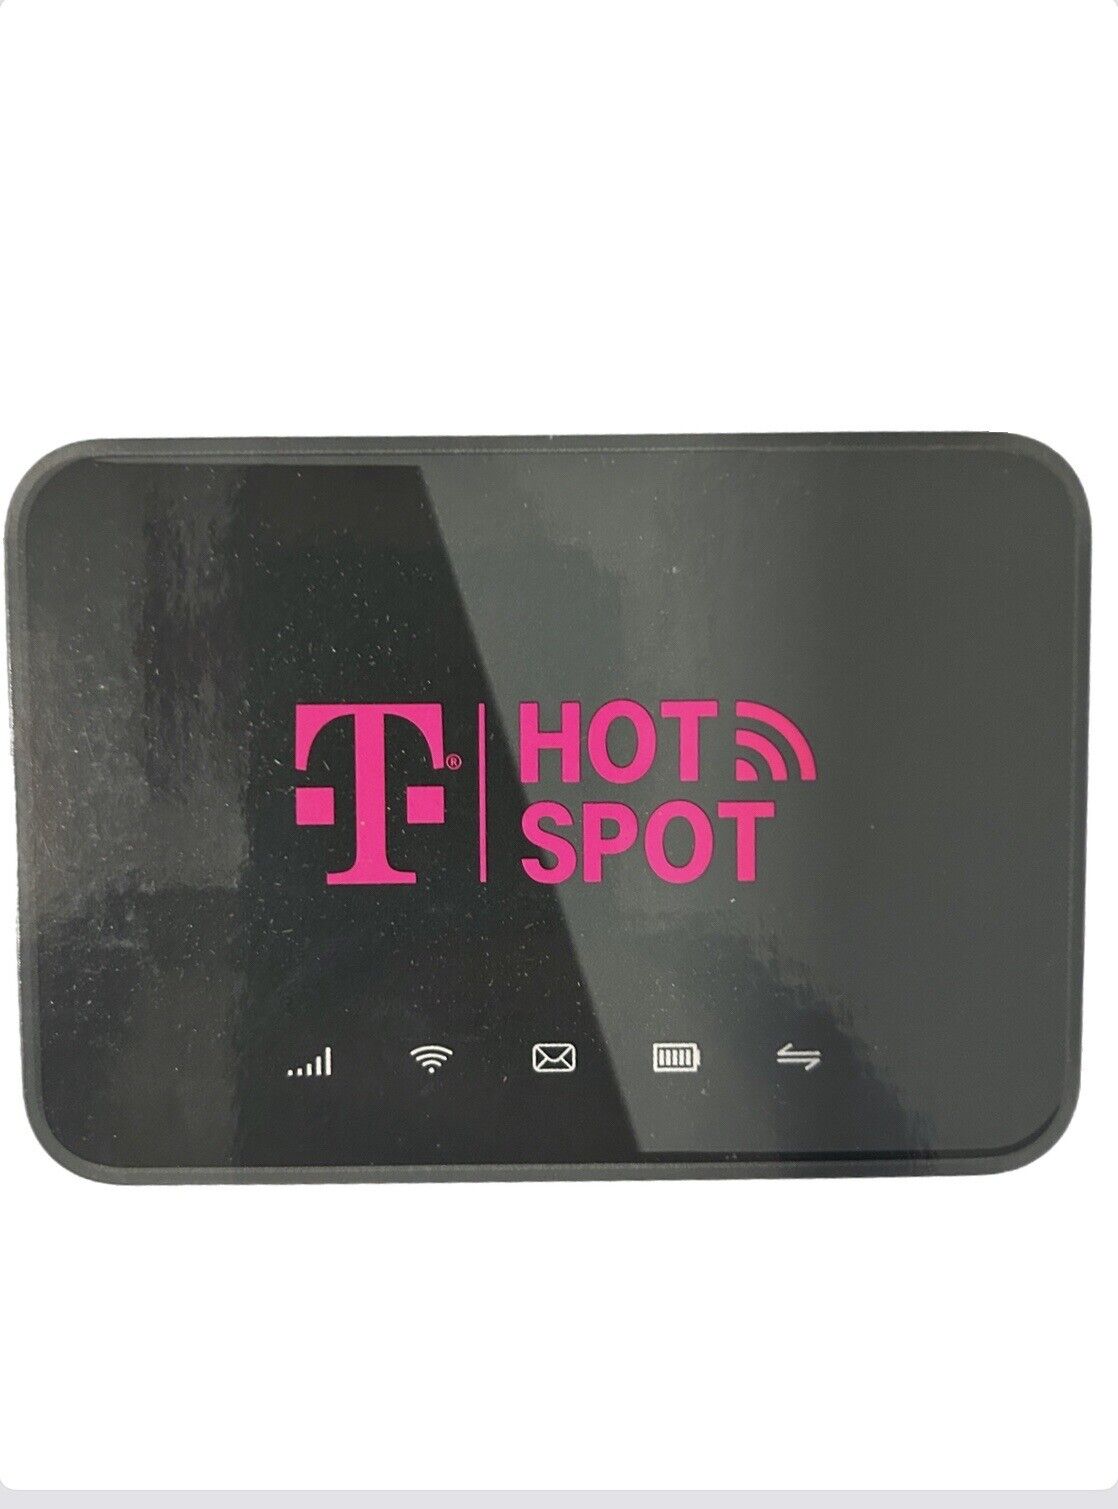 T-mobile Portable Hotspot Wifi Router